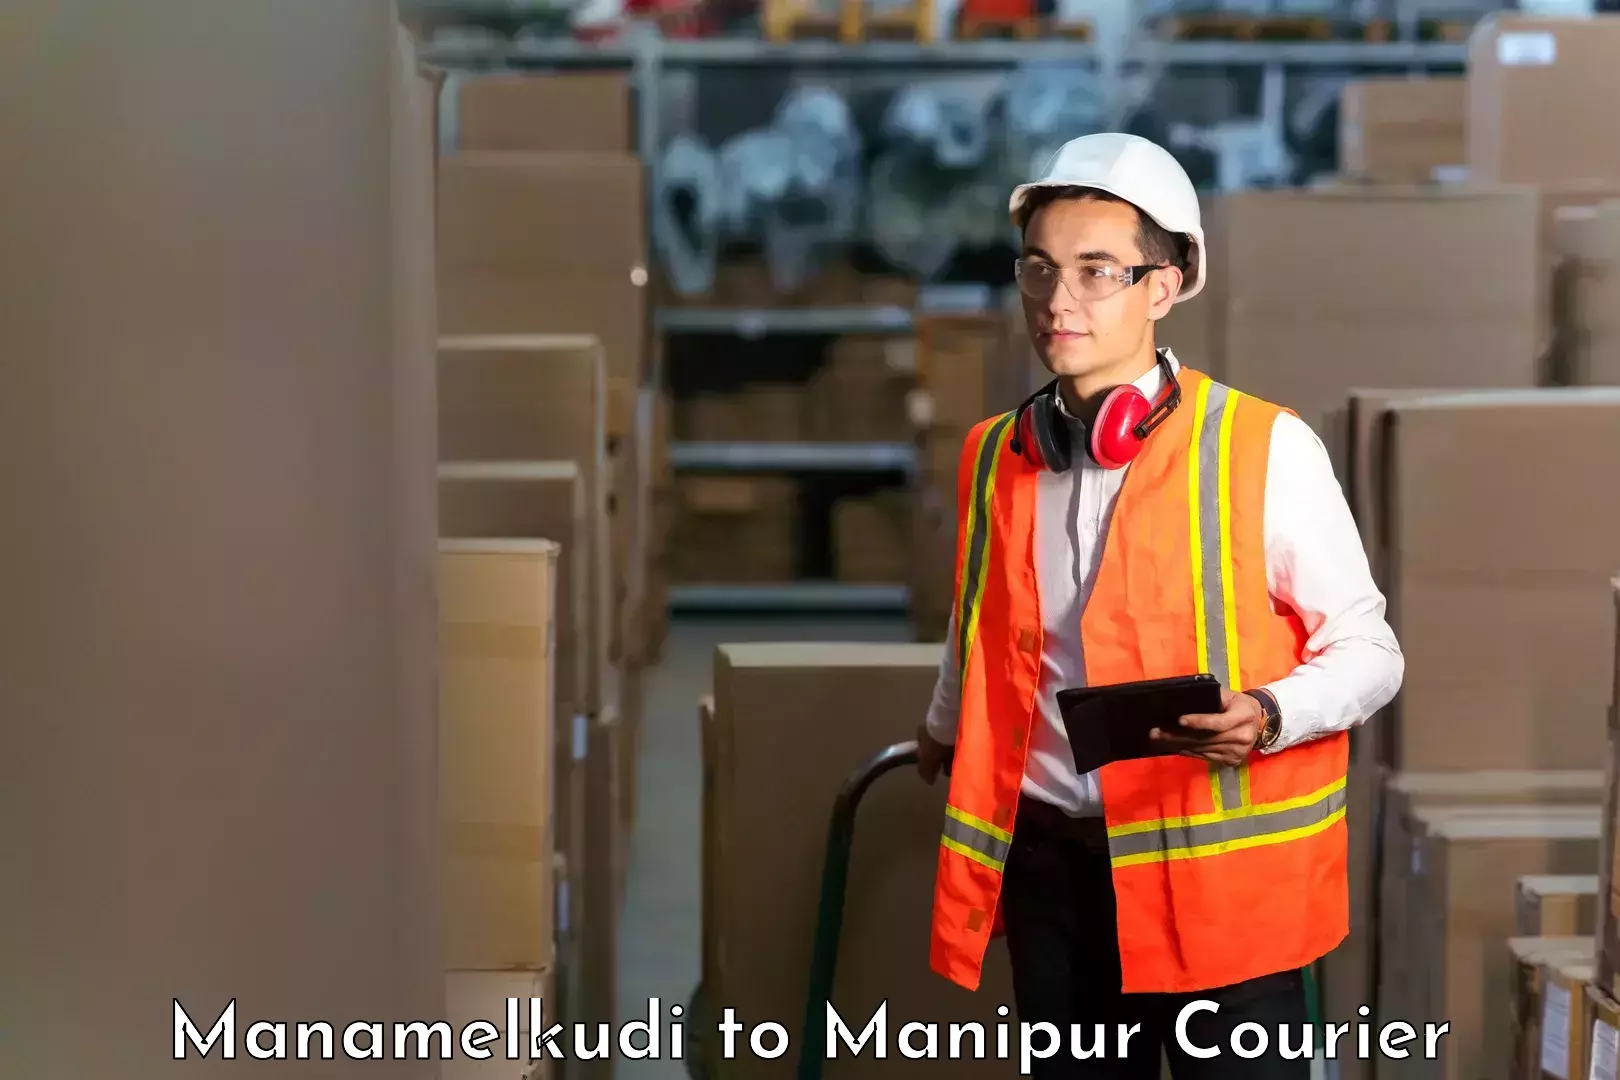 Customizable delivery plans Manamelkudi to Chandel